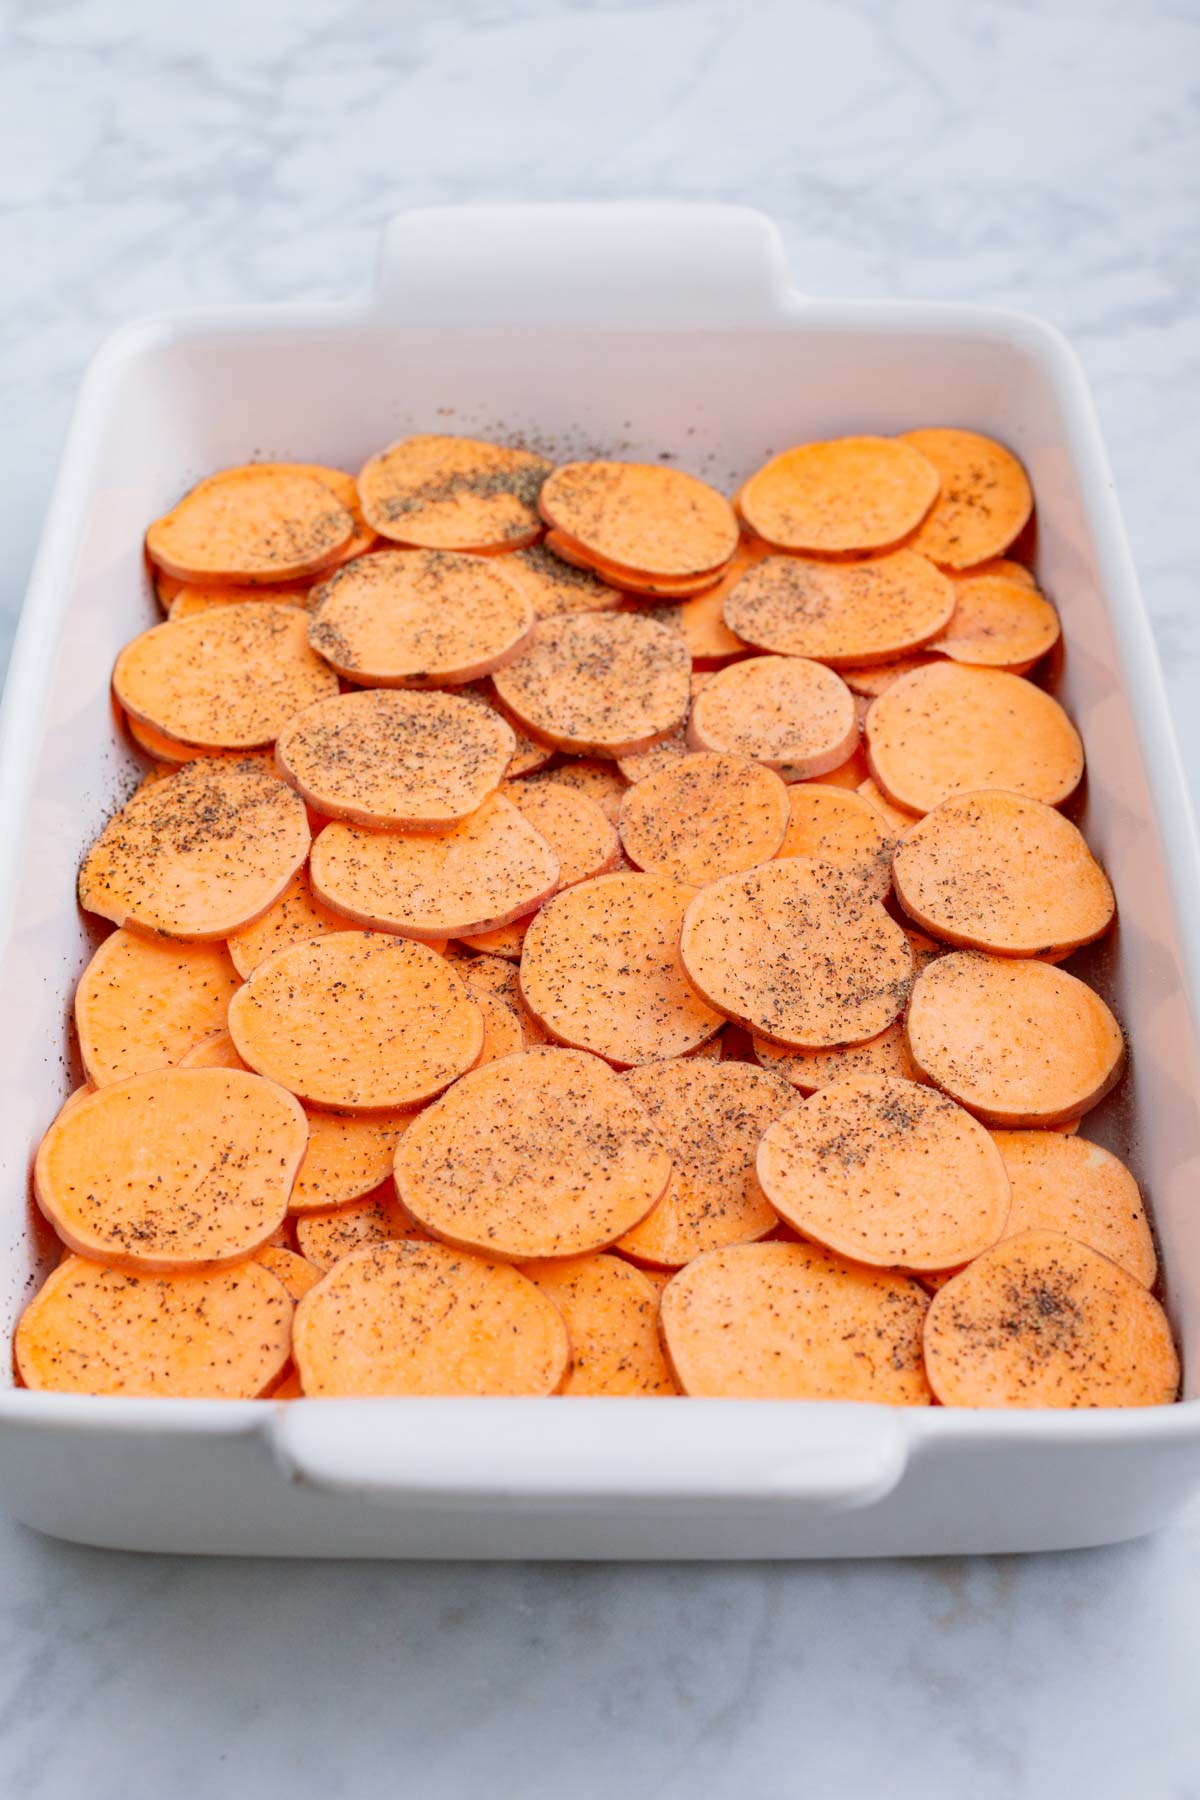 Sliced sweet potatoes are spread across a casserole pan.